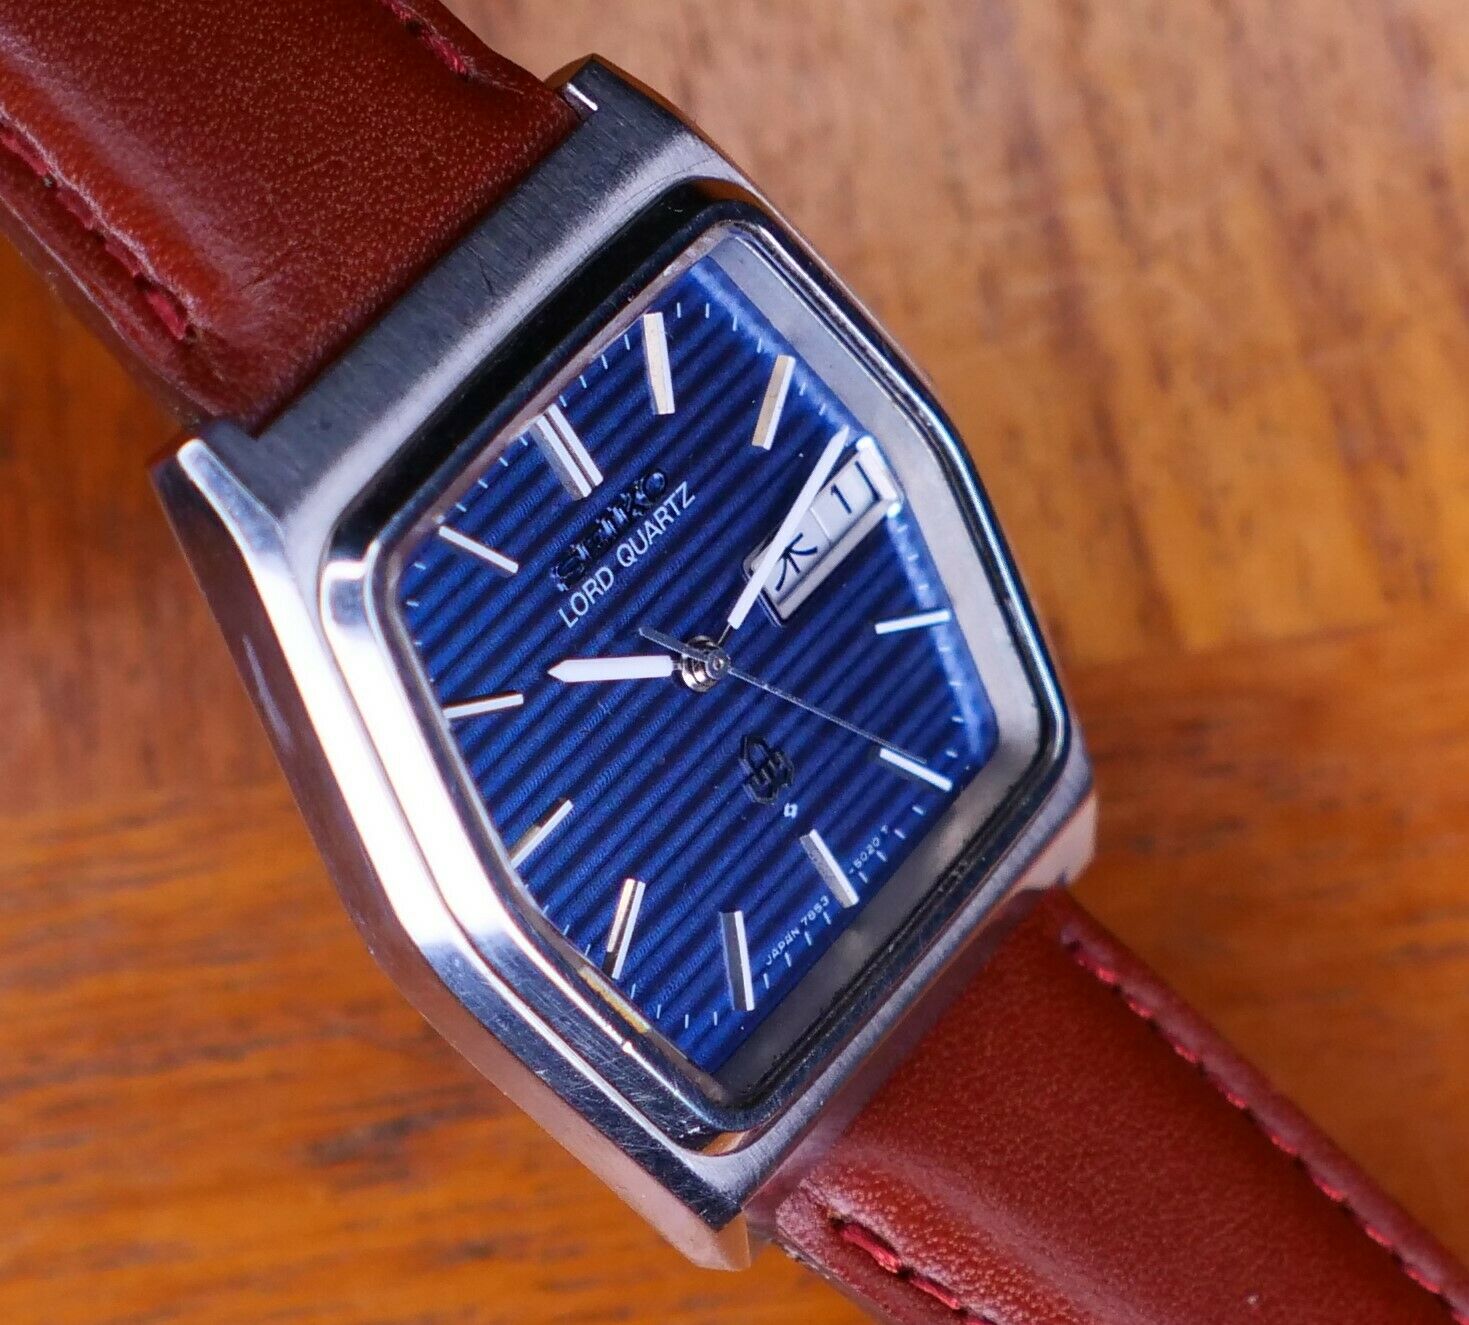 Seiko Lord Quartz - 7853-5020 - Textured Blue Dial | WatchCharts